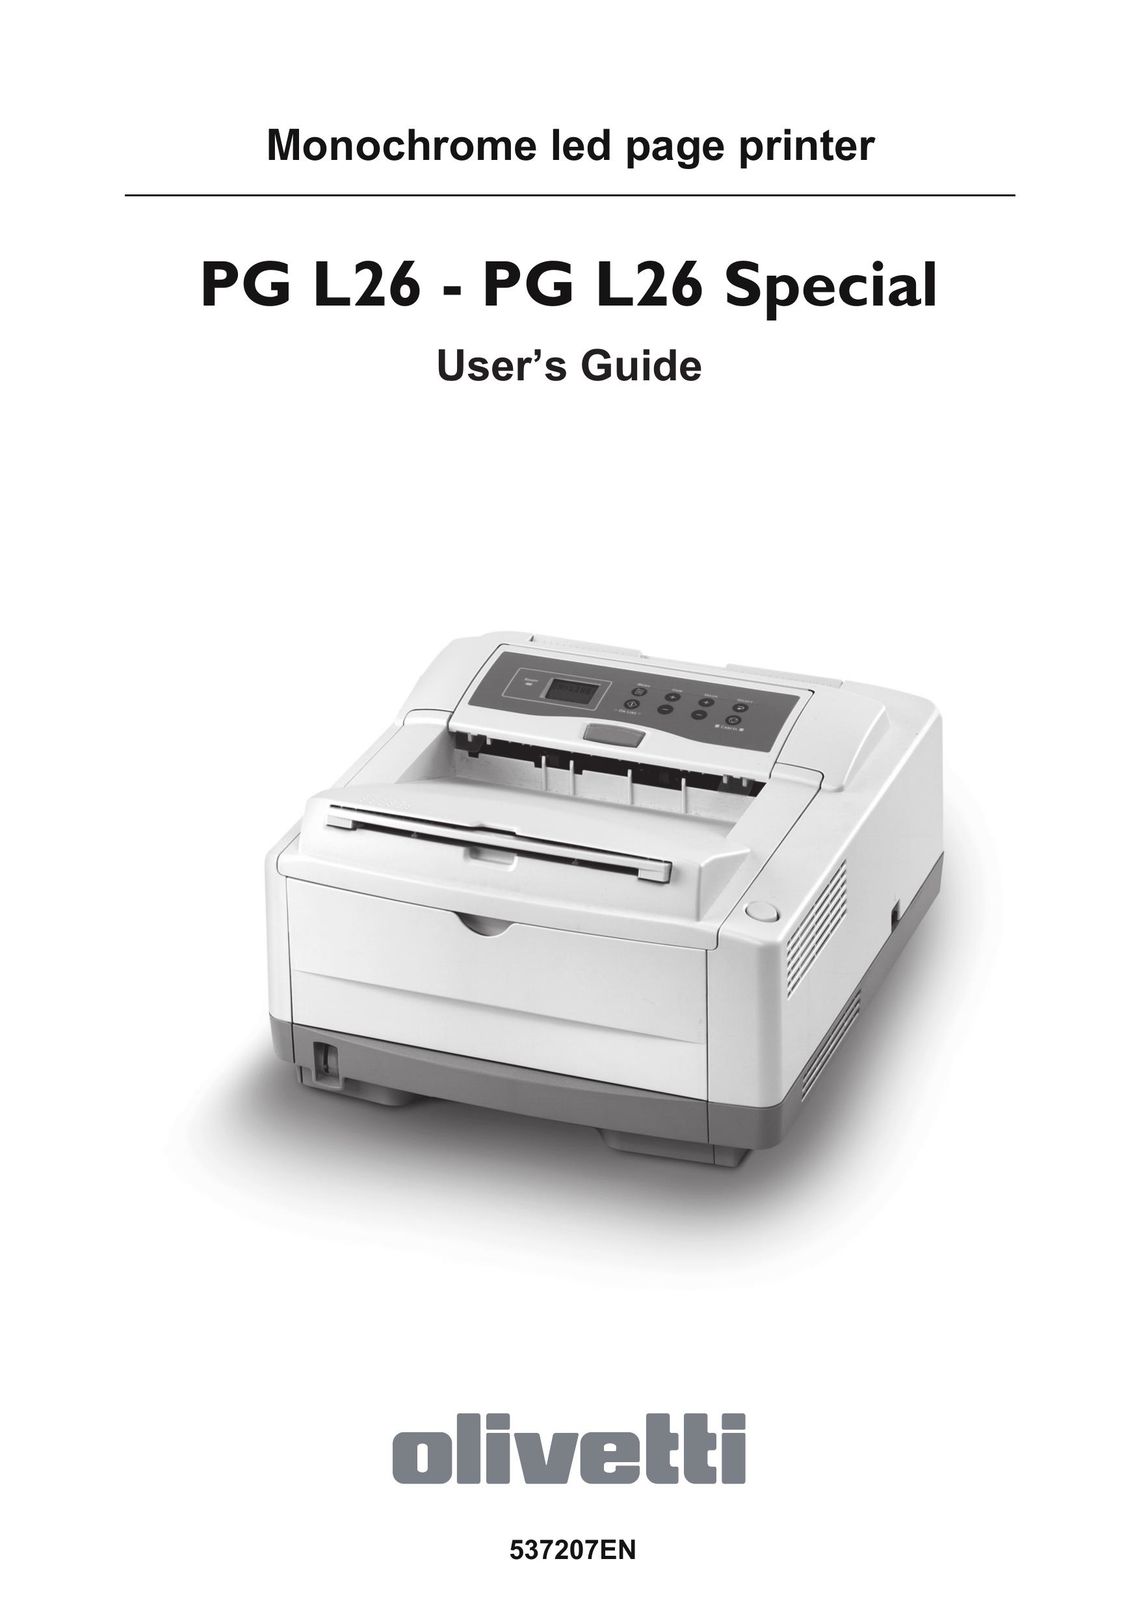 Olivetti PG L26 Printer User Manual